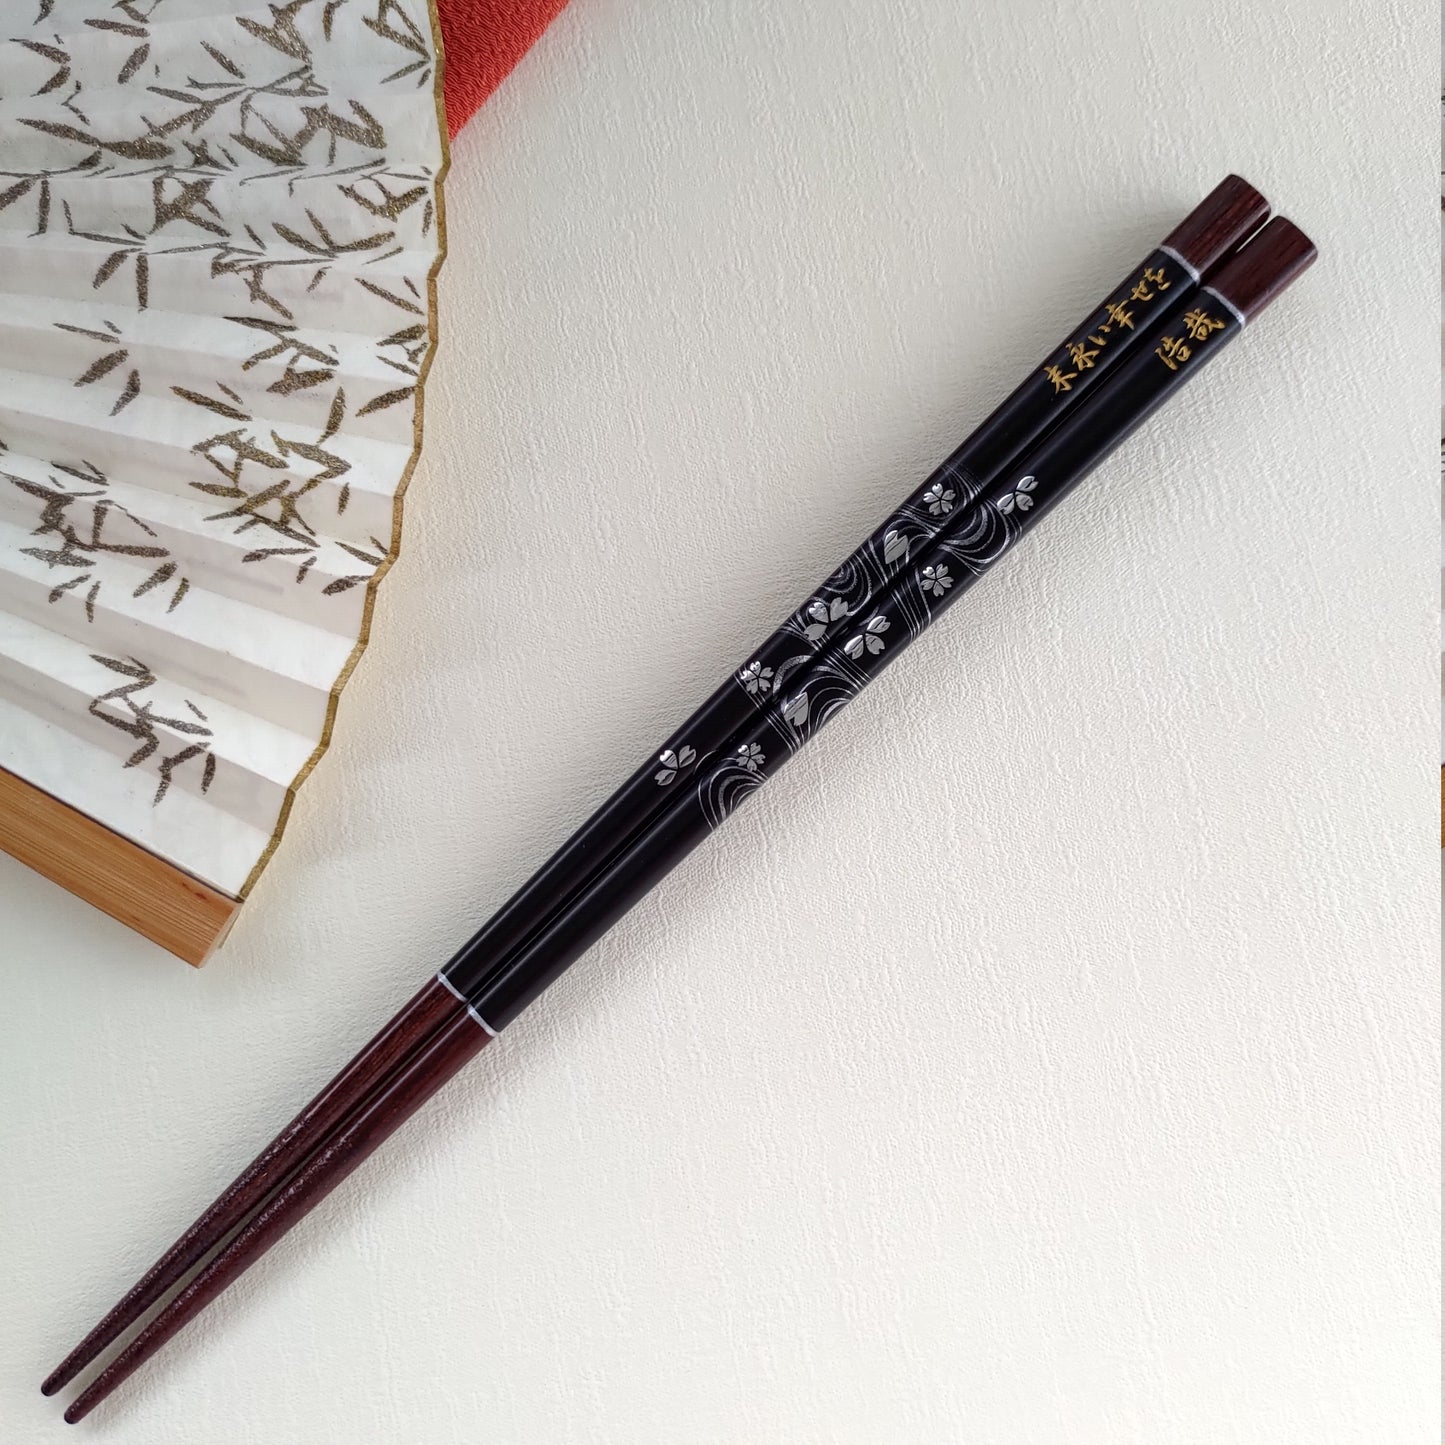 Elegant Japanese chopsticks with cherry blossoms on river stream black red - SINGLE PAIR